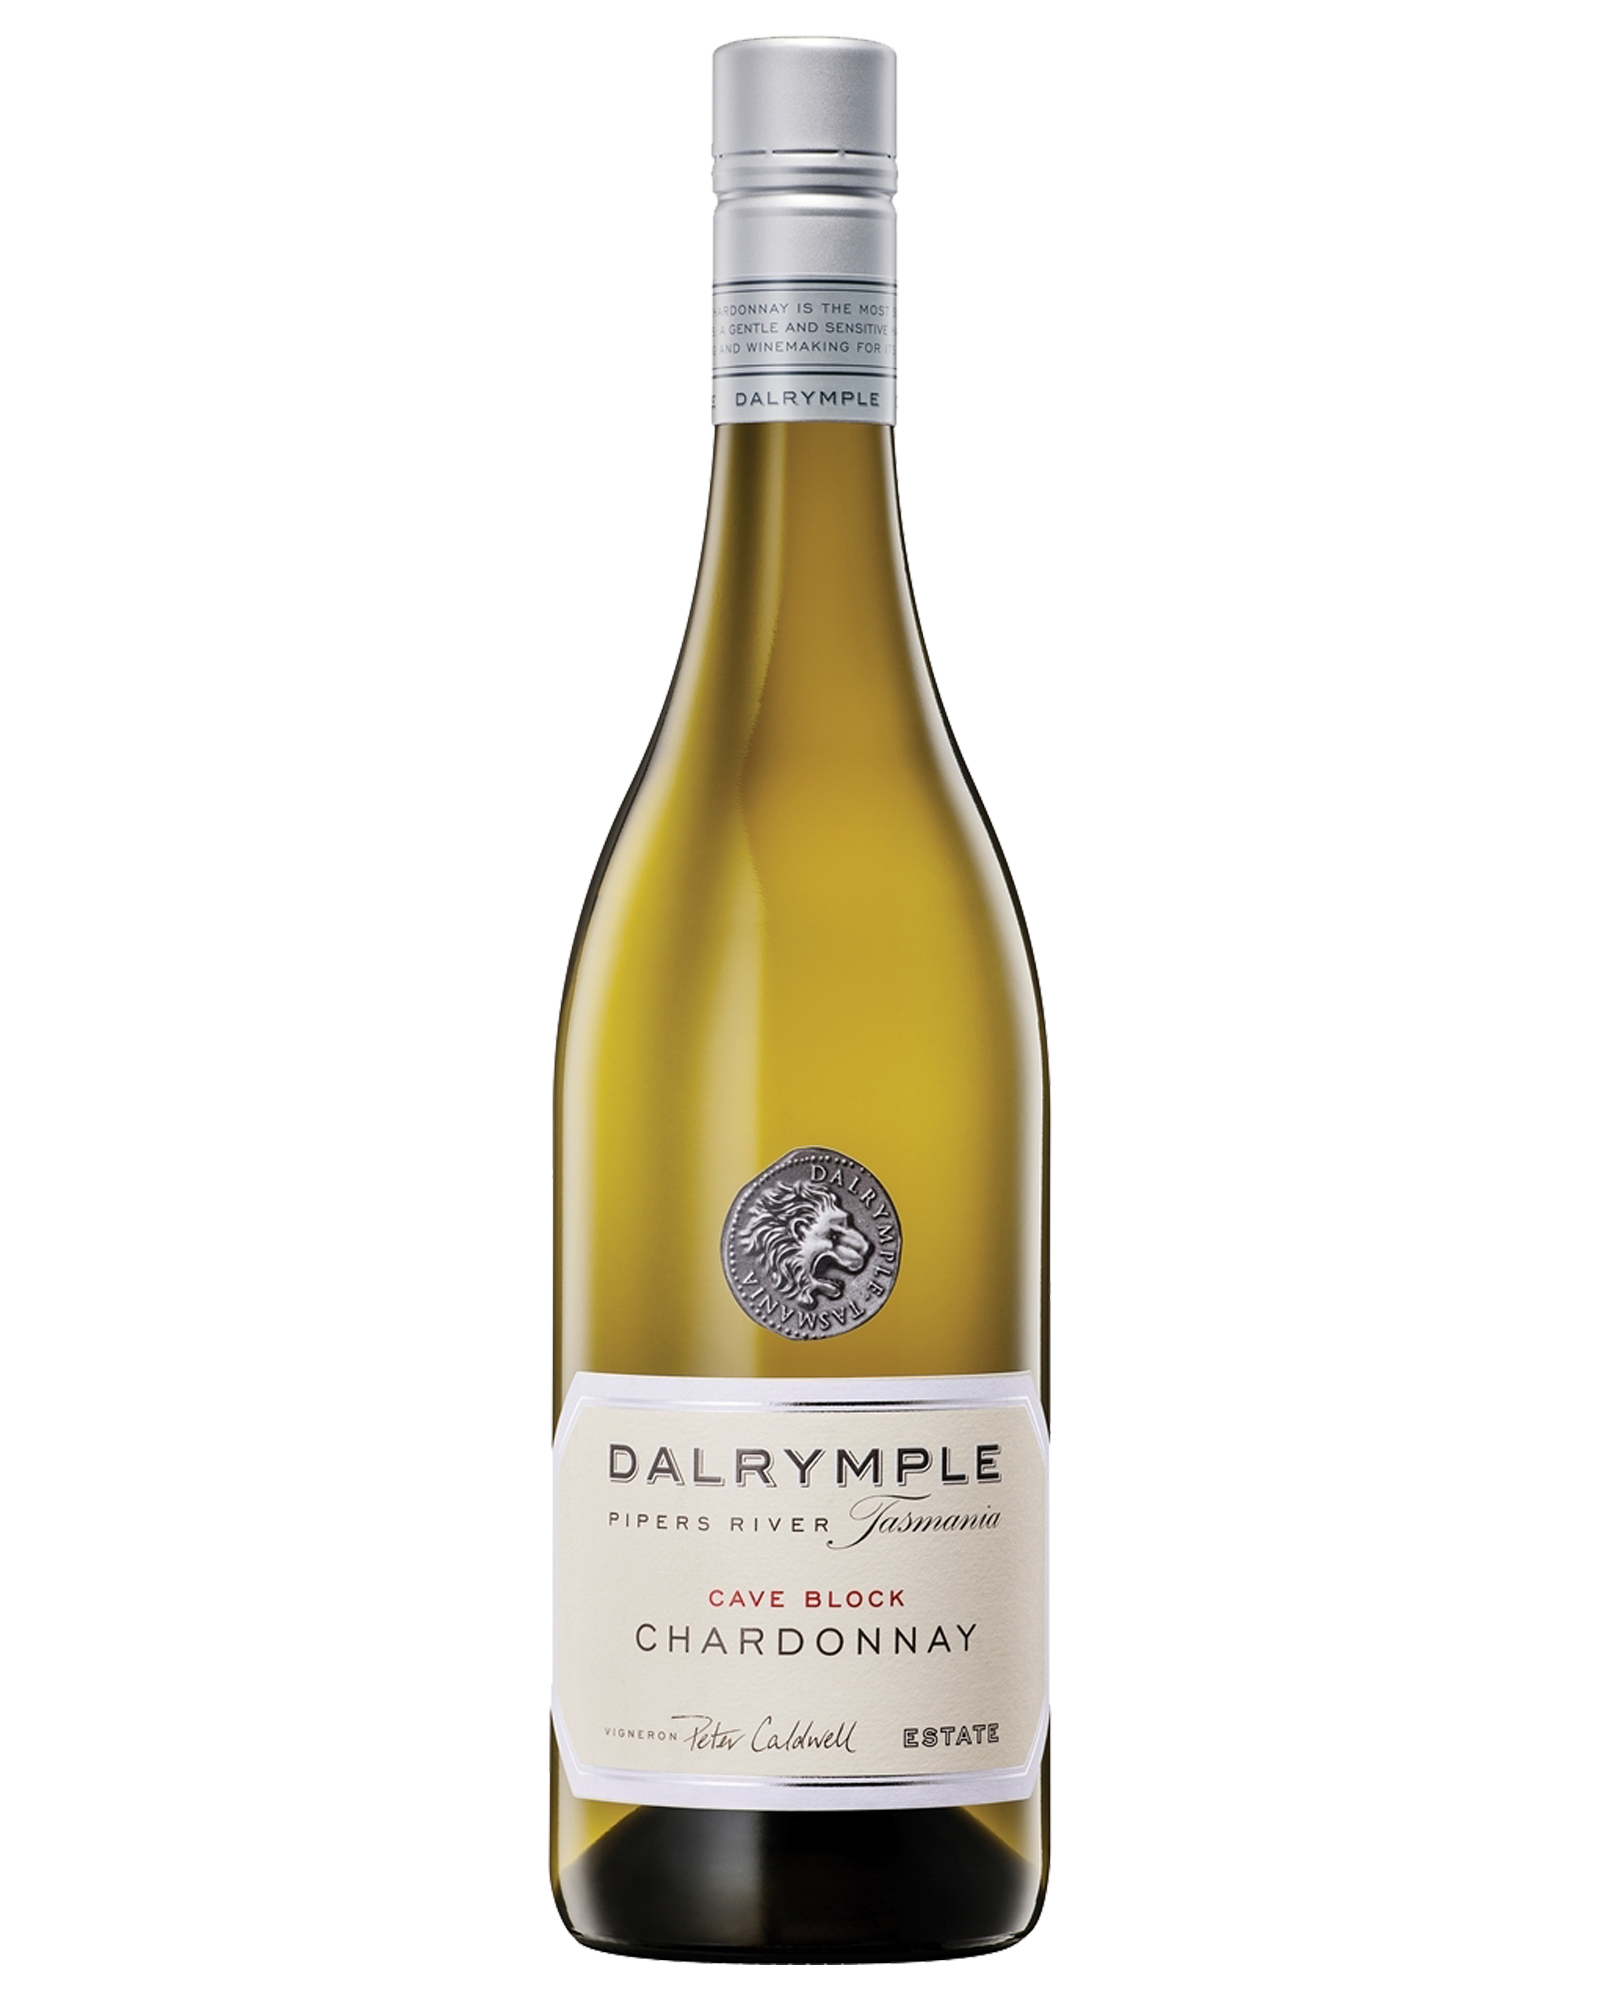 Dalrymple Cave Block Chardonnay